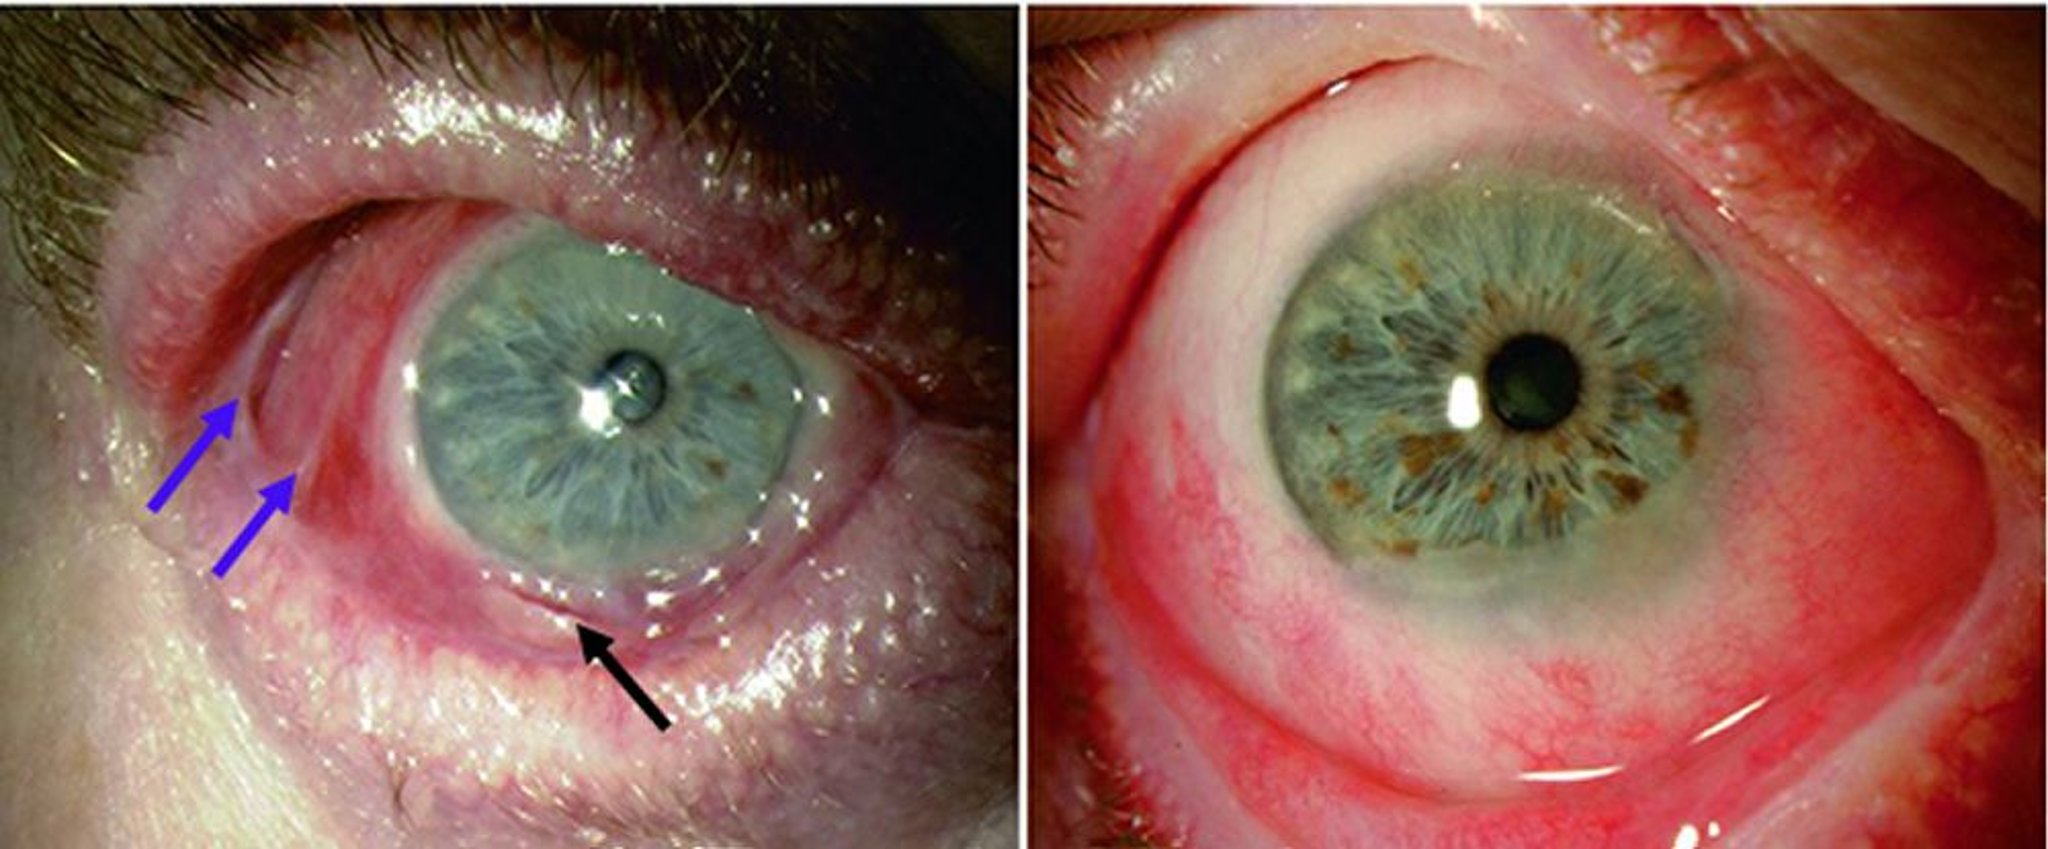 Pemphigoïde des muqueuses oculaires